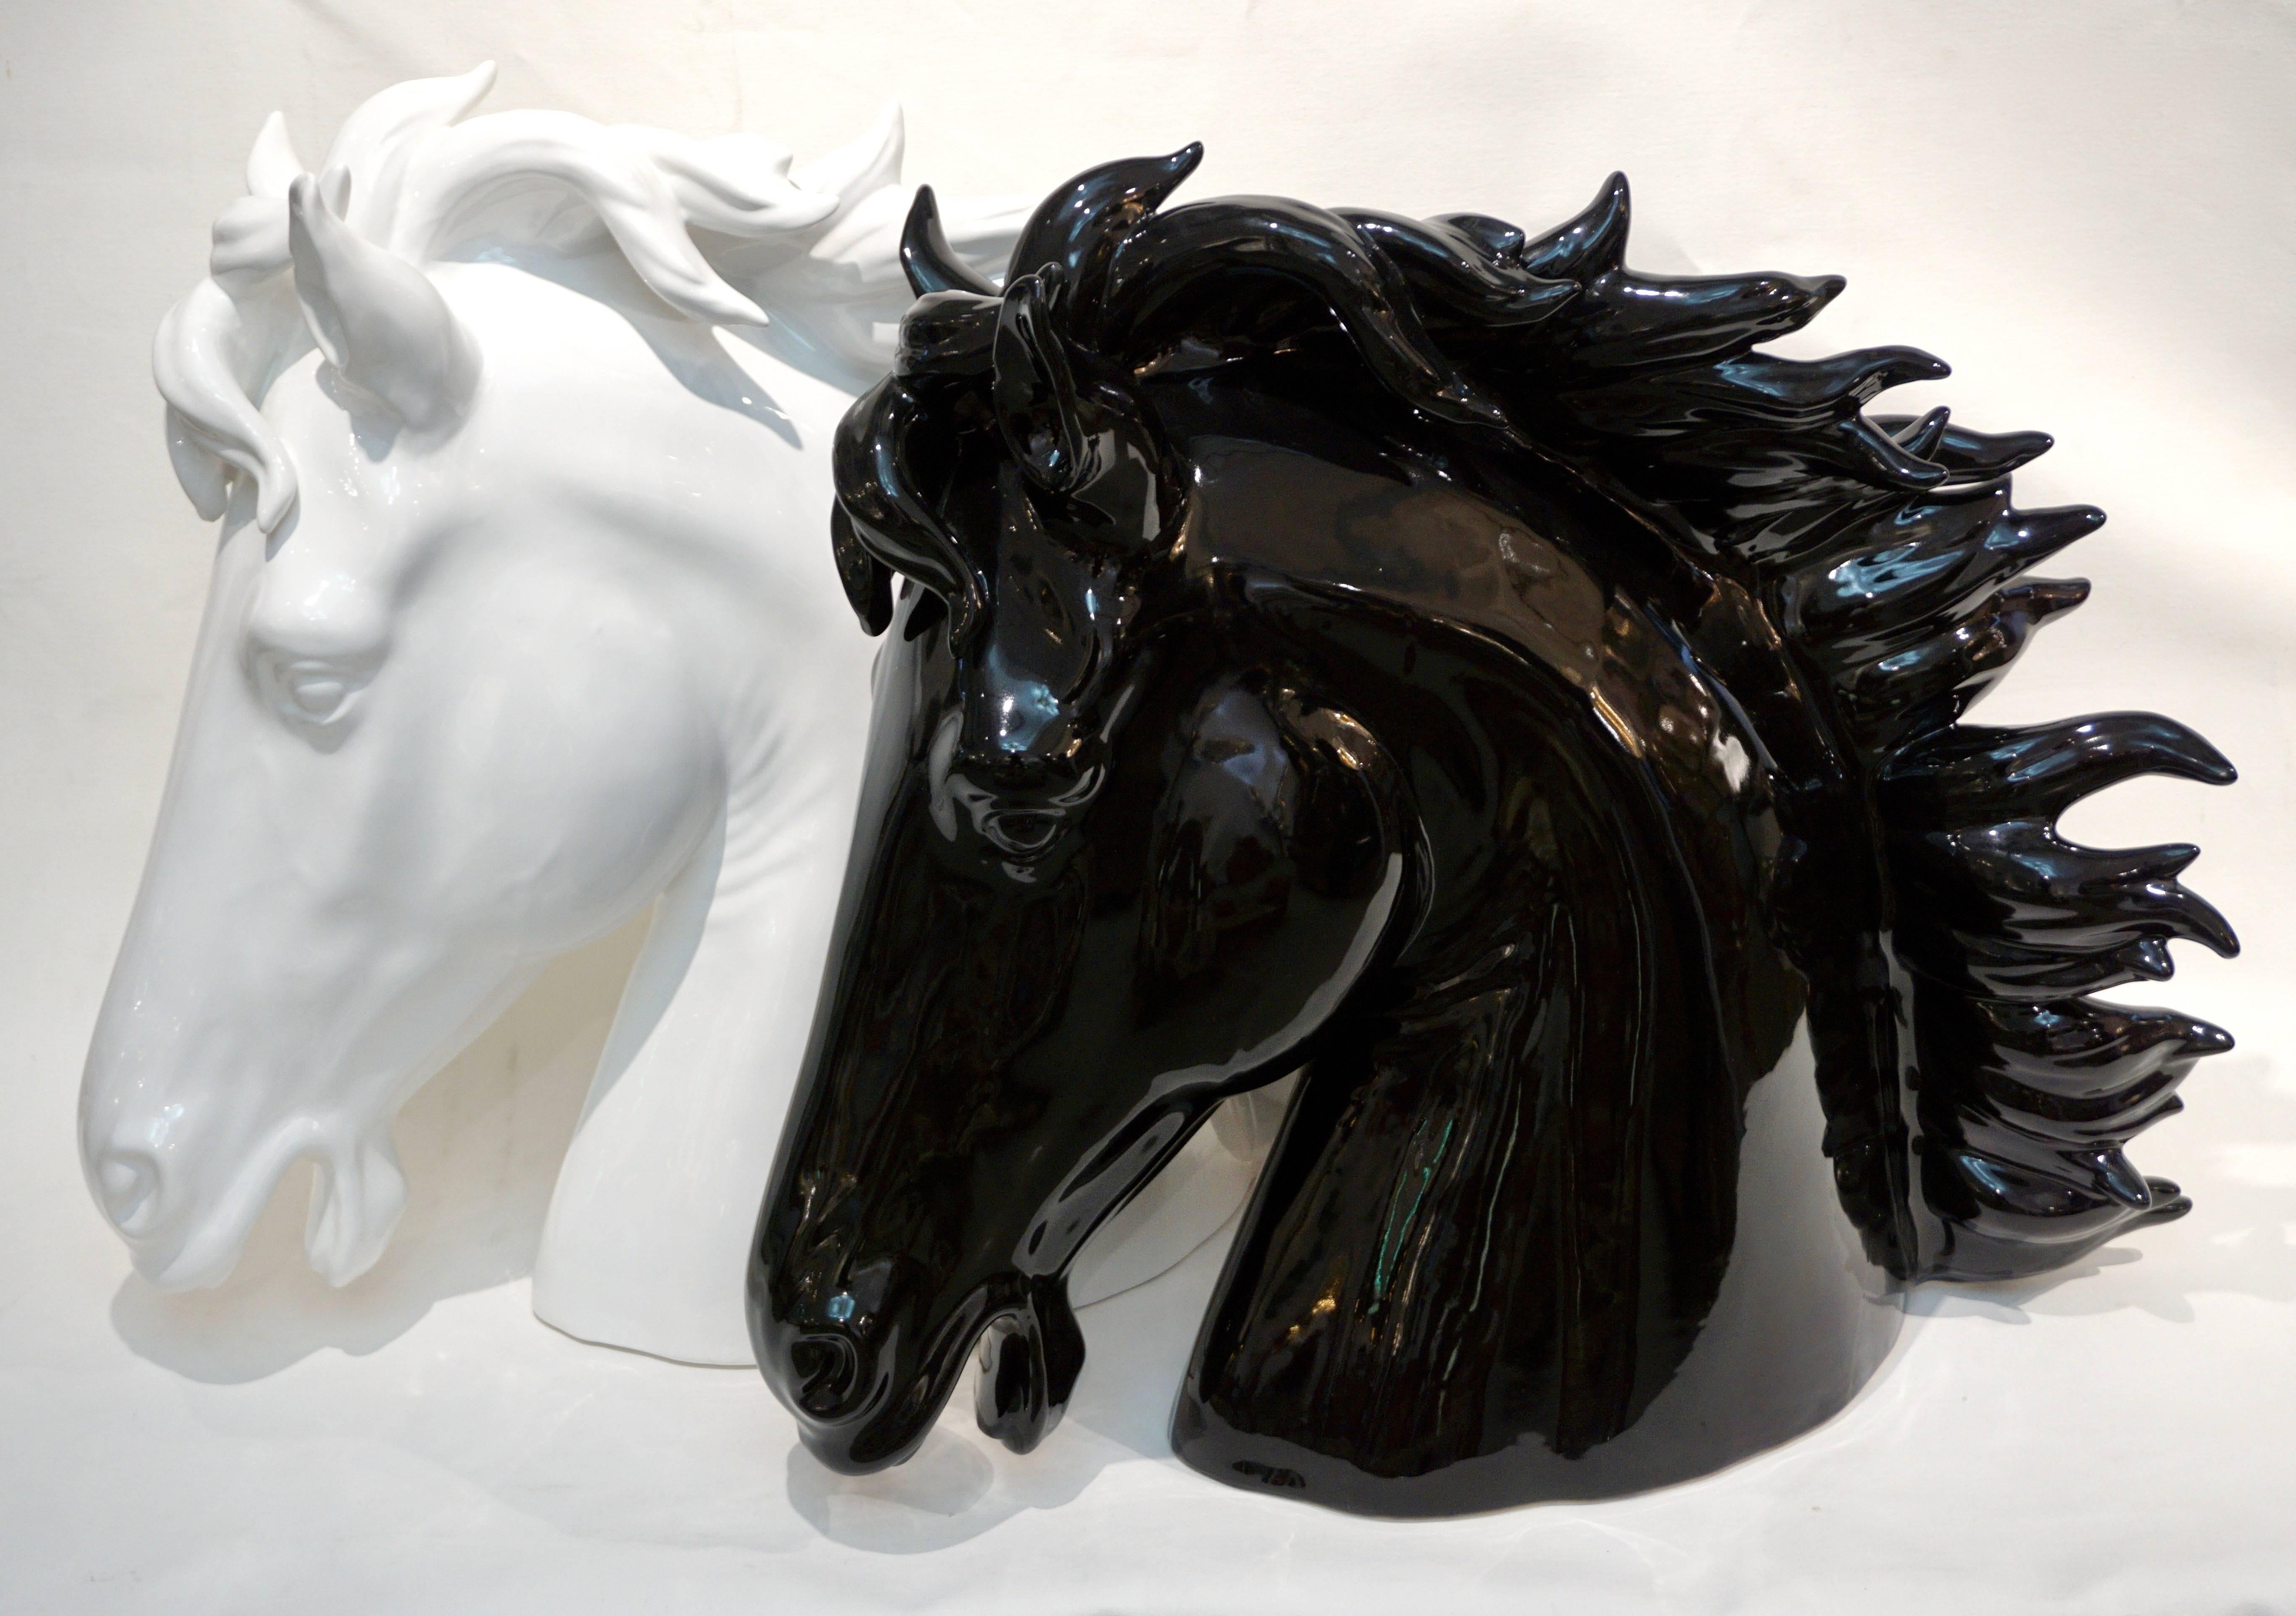 Modern Art Deco Design Oversized Black and White Ceramic Horse Head Sculptures For Sale 8